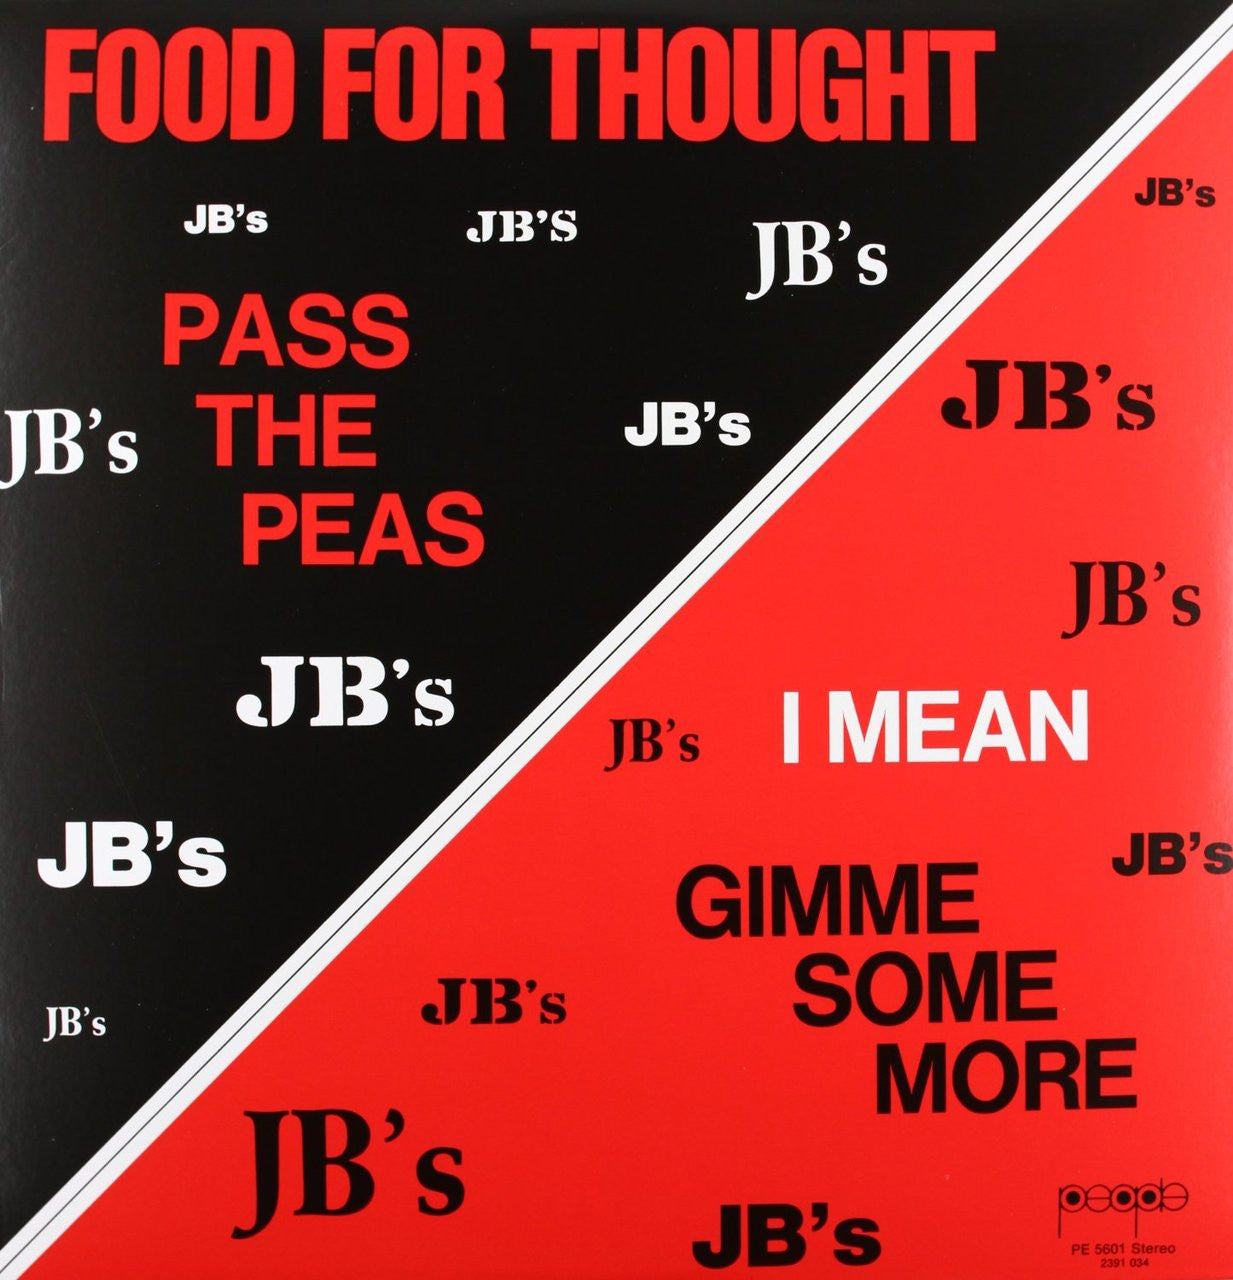 The J.B.'s - Food For Thought, LP vinyl + bonus 7" - The Giant Peach